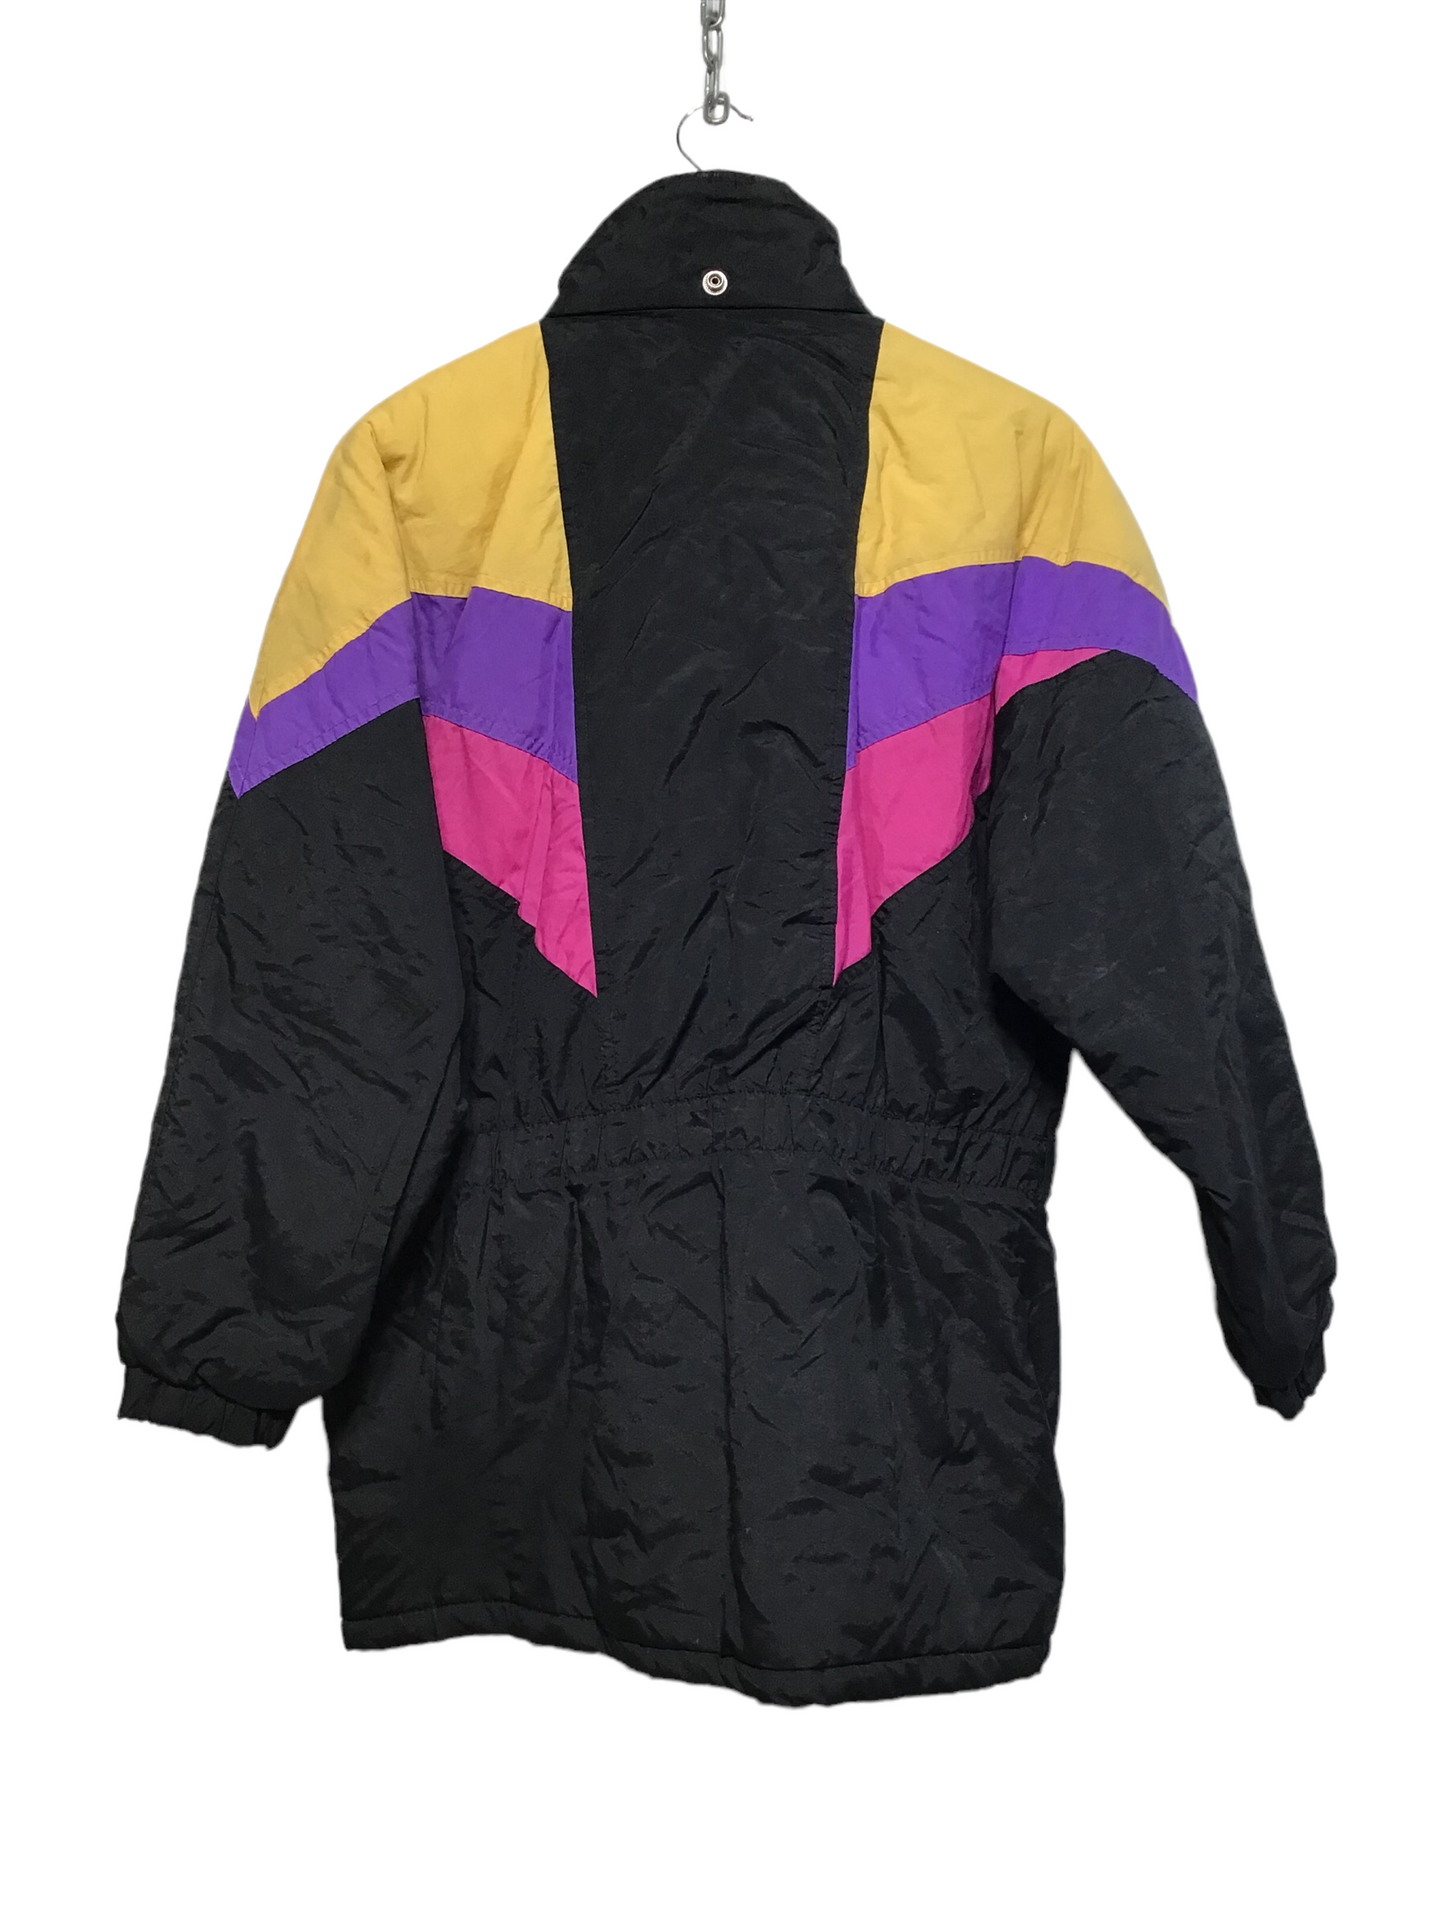 80s Ski Jacket (Size M)